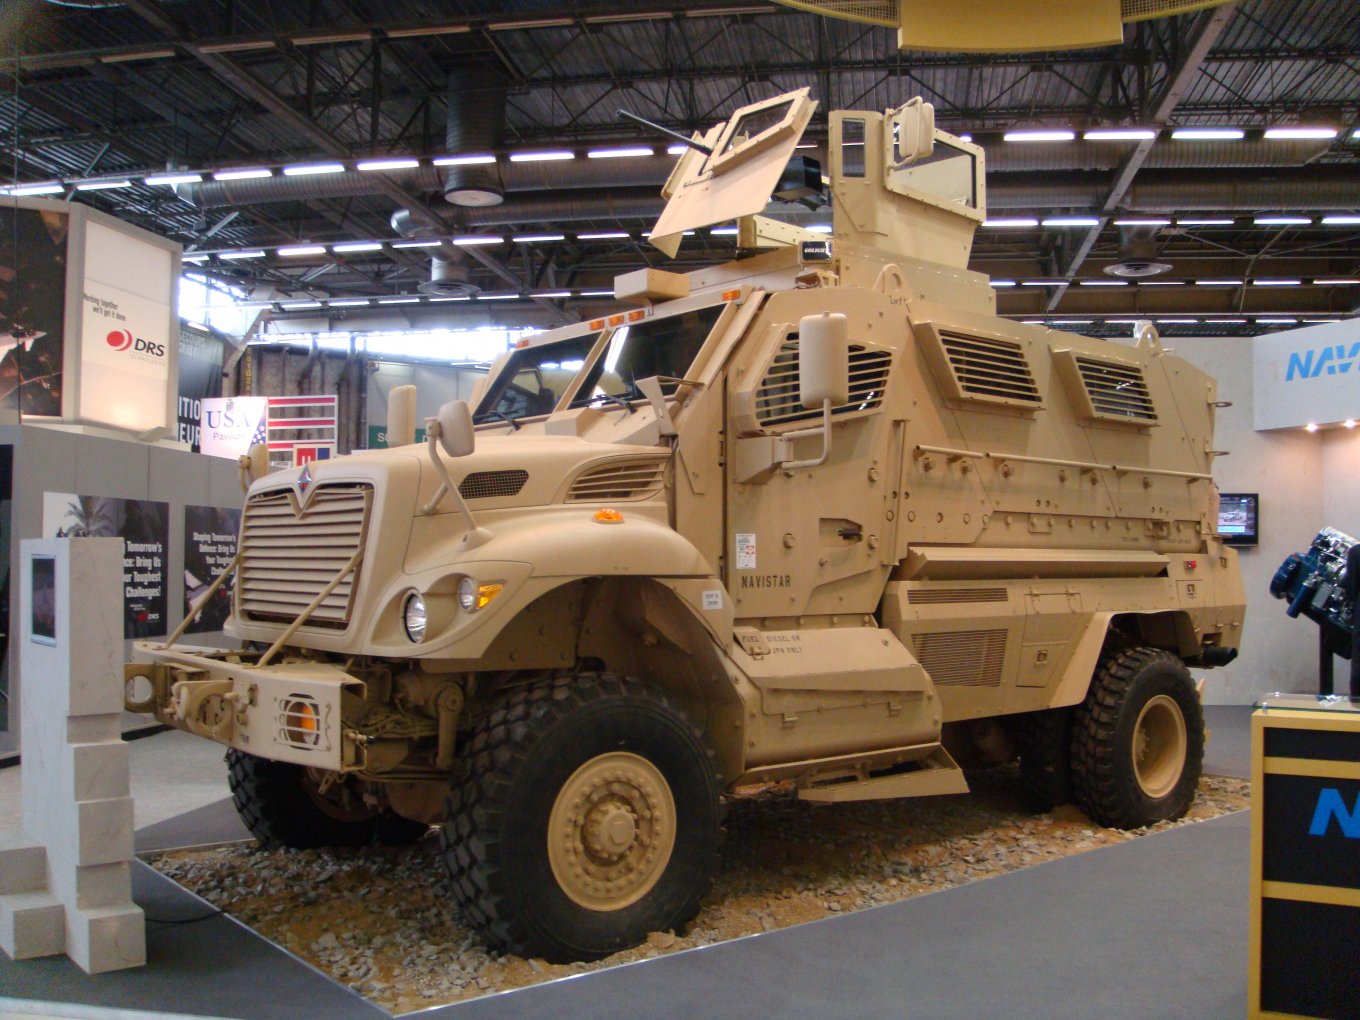 M1224 MaxxPro MRAP (Mine Resistant Ambush Protected) Vehicle